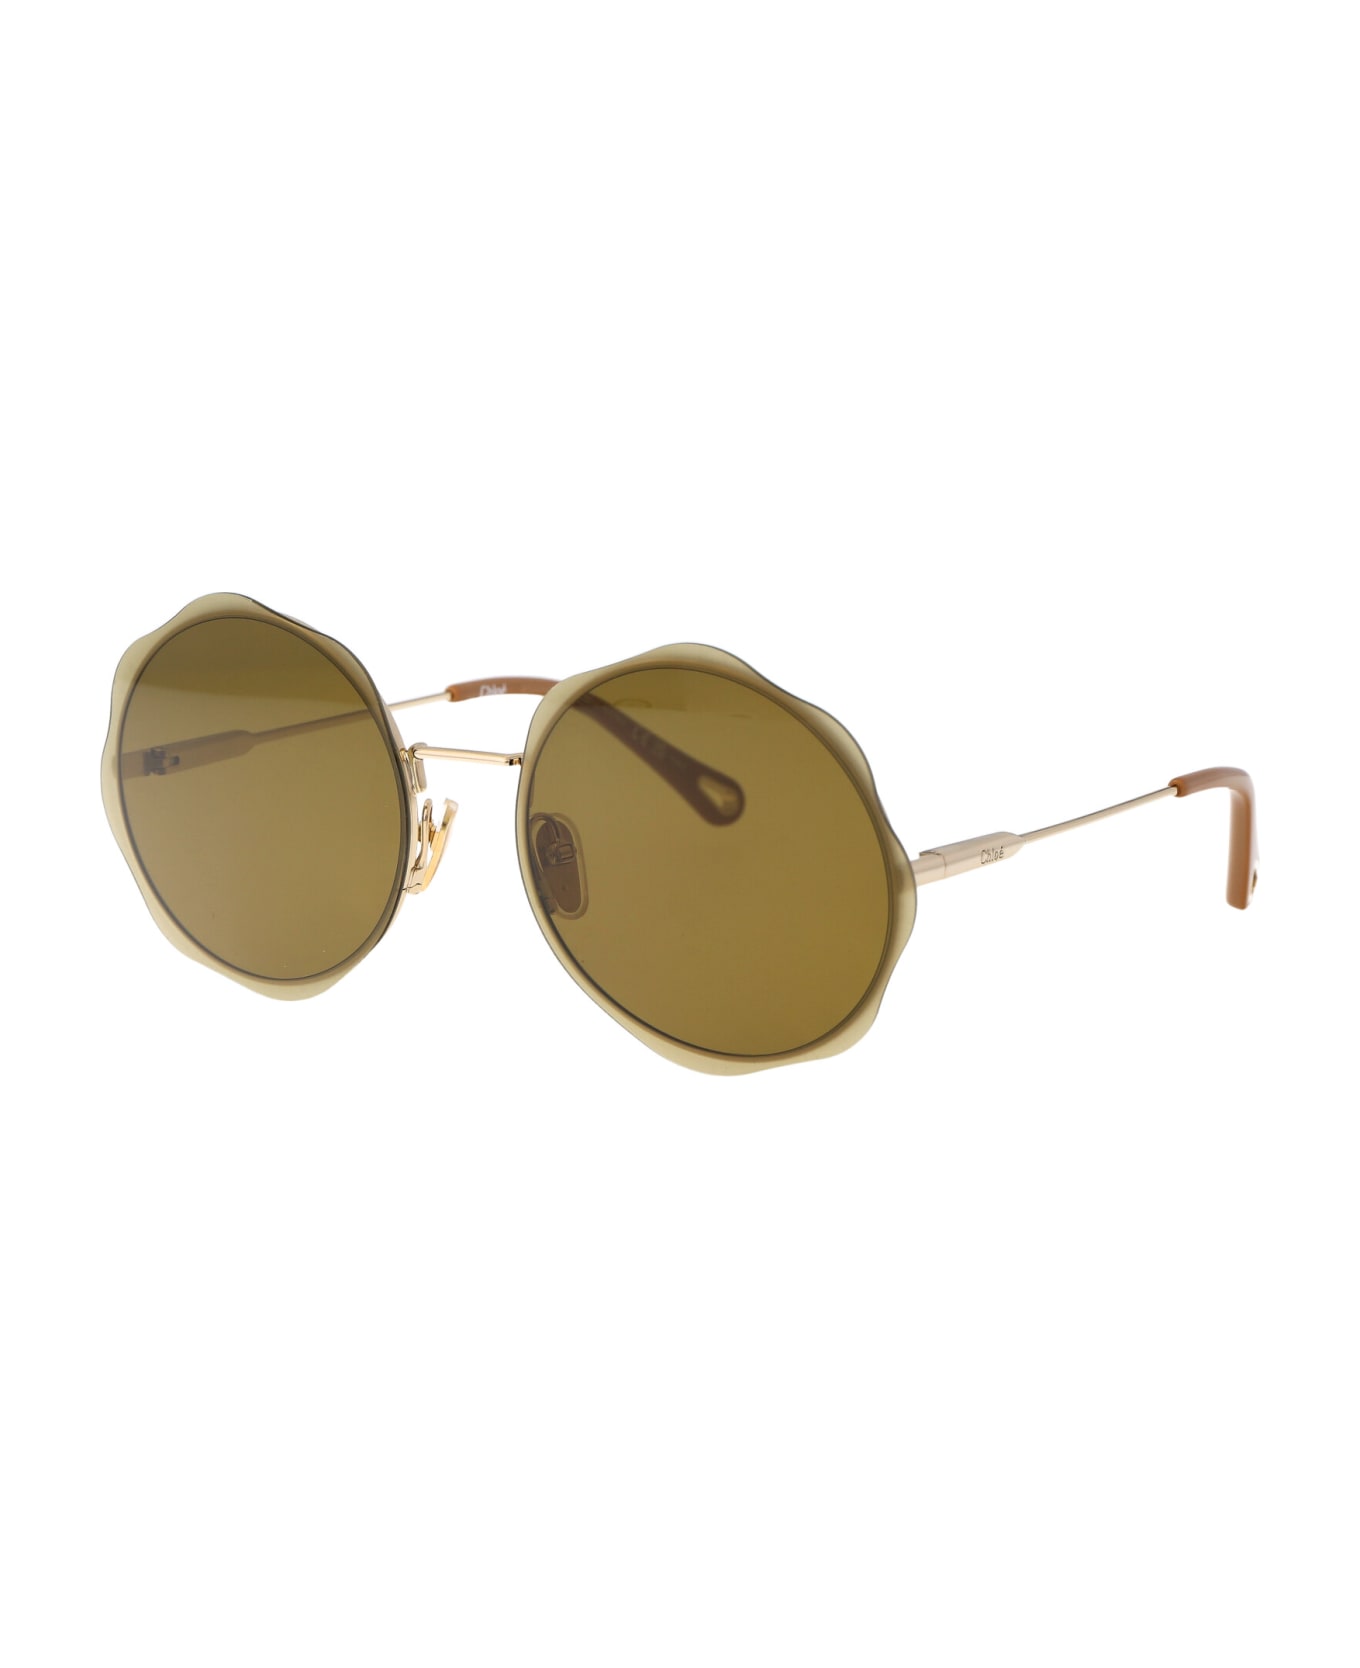 Chloé Eyewear Ch0202s Sunglasses - 001 GOLD GOLD GREEN